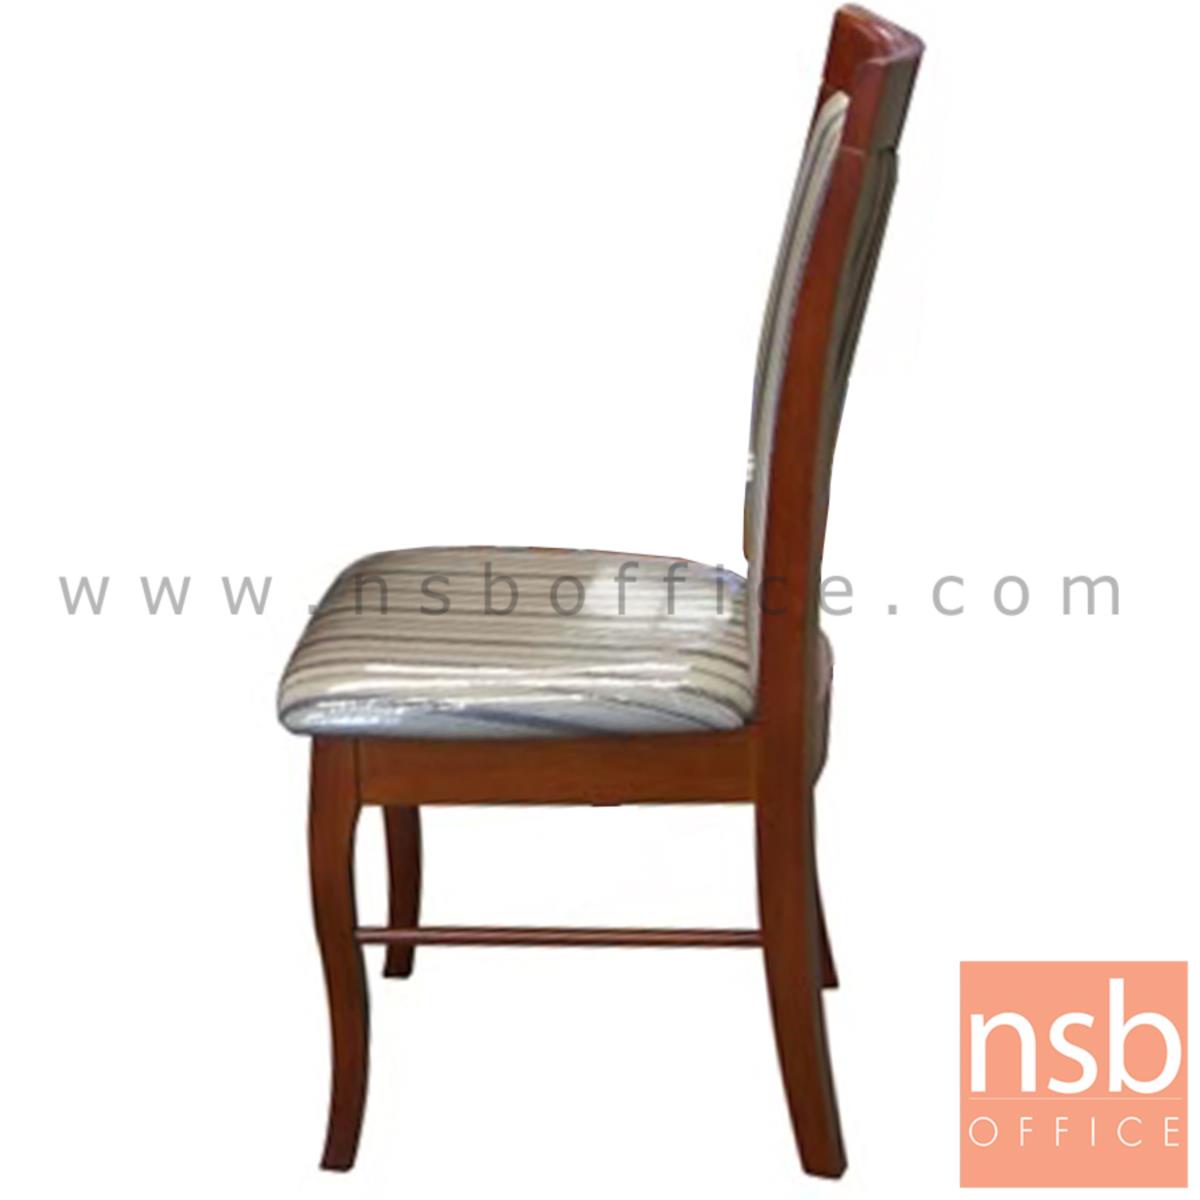 B22A157:ก้าอี้ไม้ที่นั่งหนังเทียม รุ่น STABLE  ขาไม้ สีน้ำตาลแดง